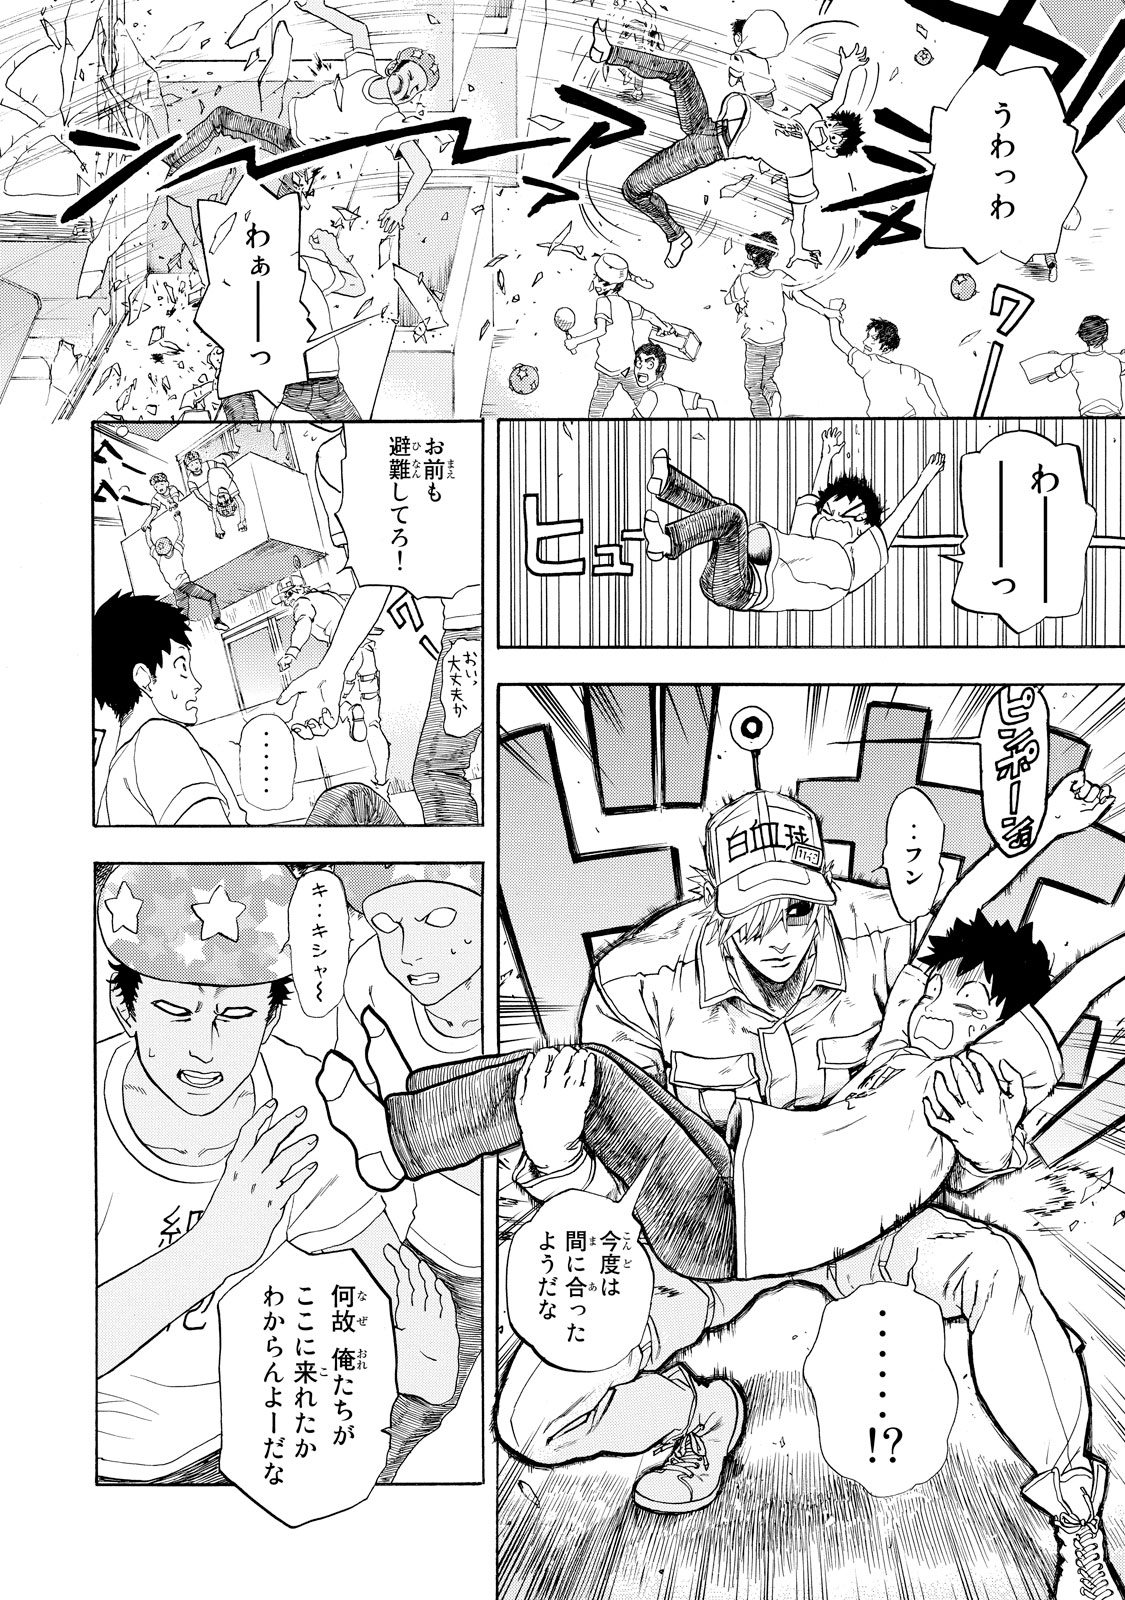 Hataraku Saibou - Chapter 11 - Page 22